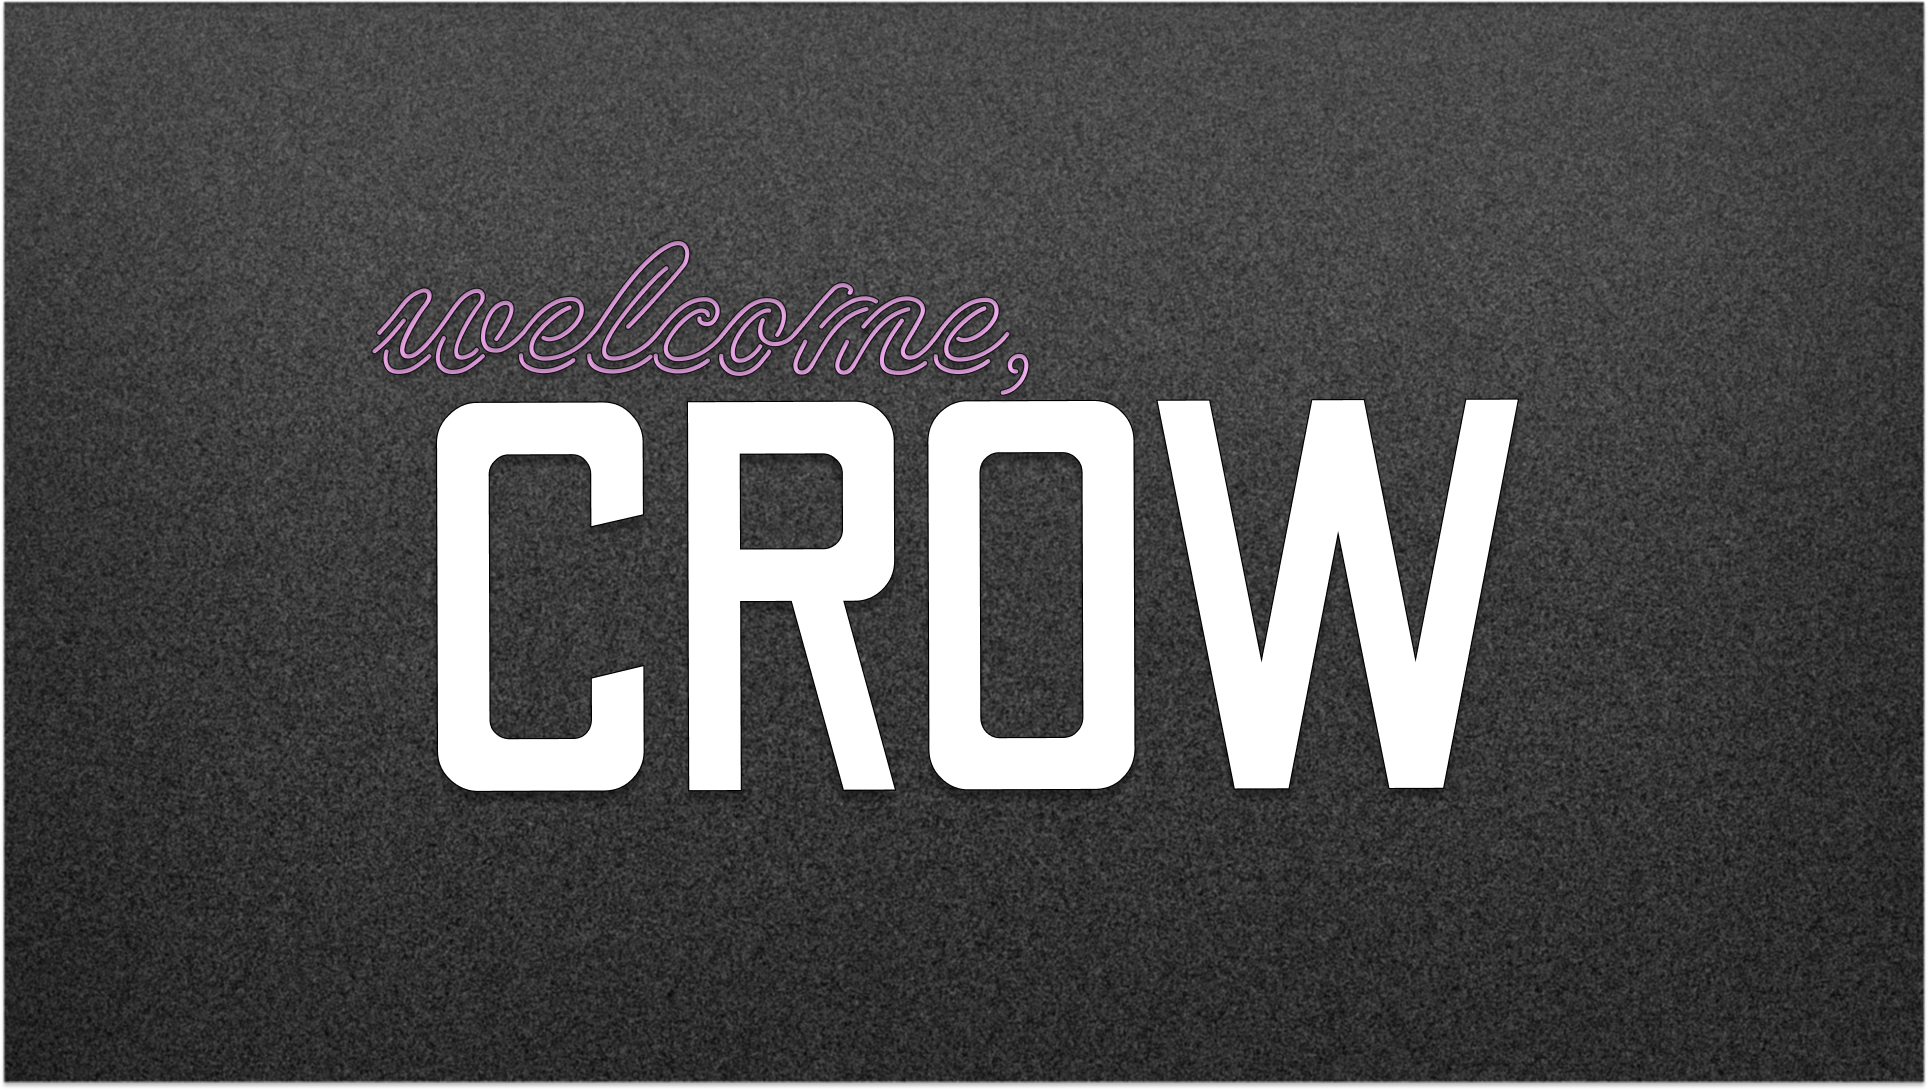 welcome, crow